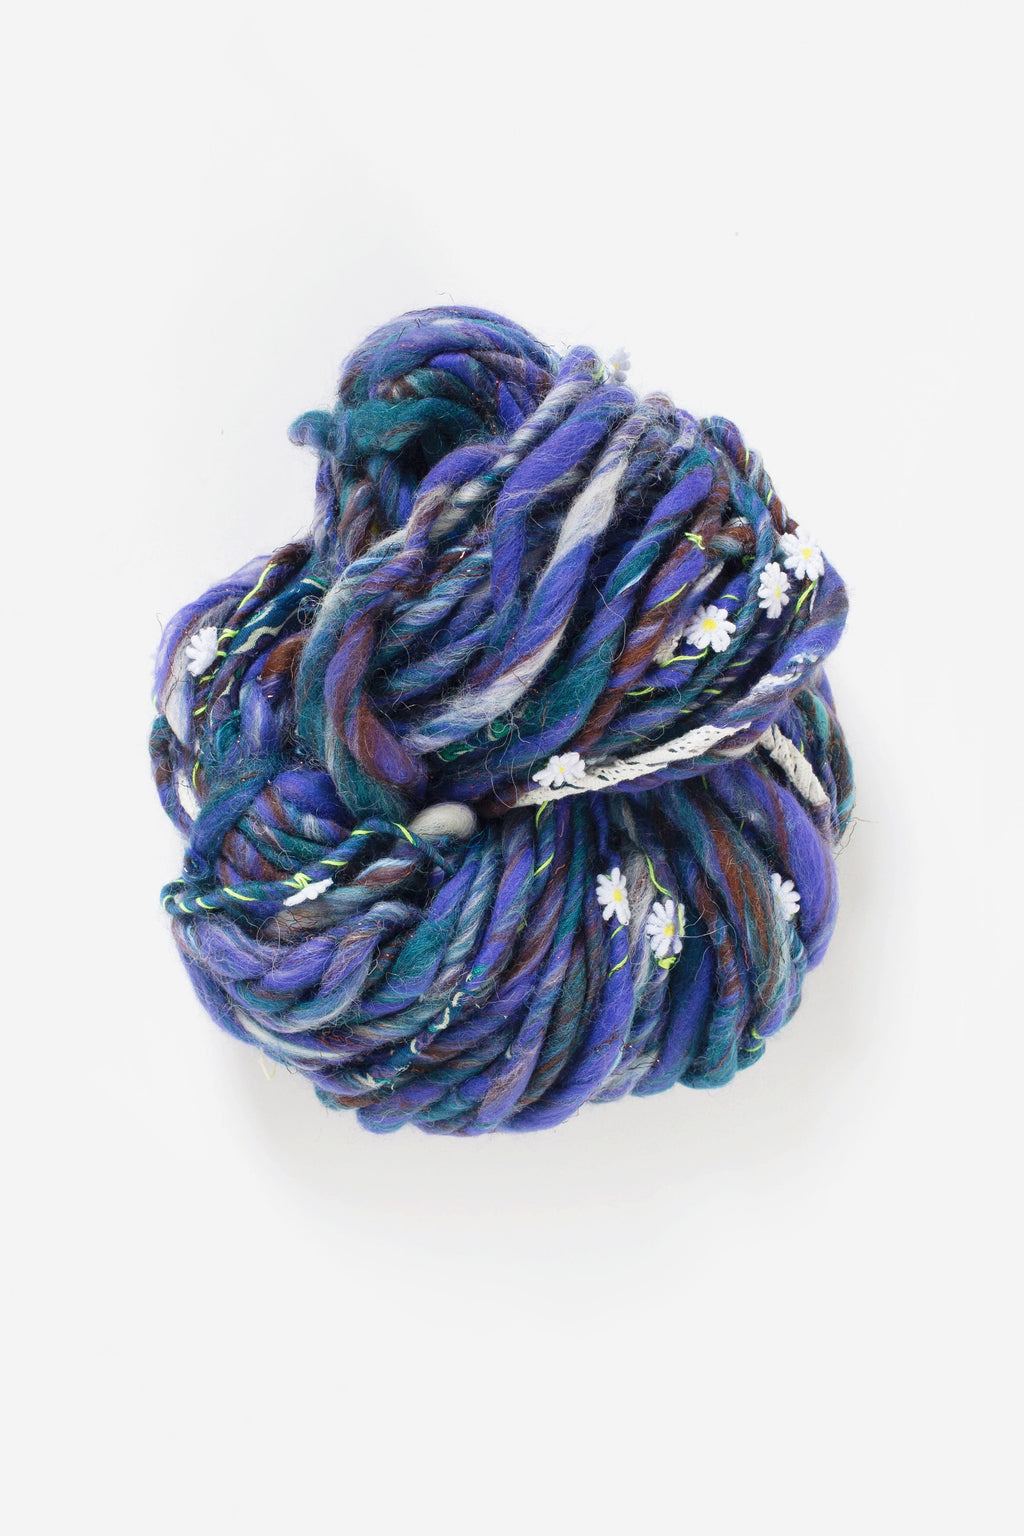 Daisy Chain Yarn in Blue Jay by Knit Collage - Chunky bulky Hand knitting yarn